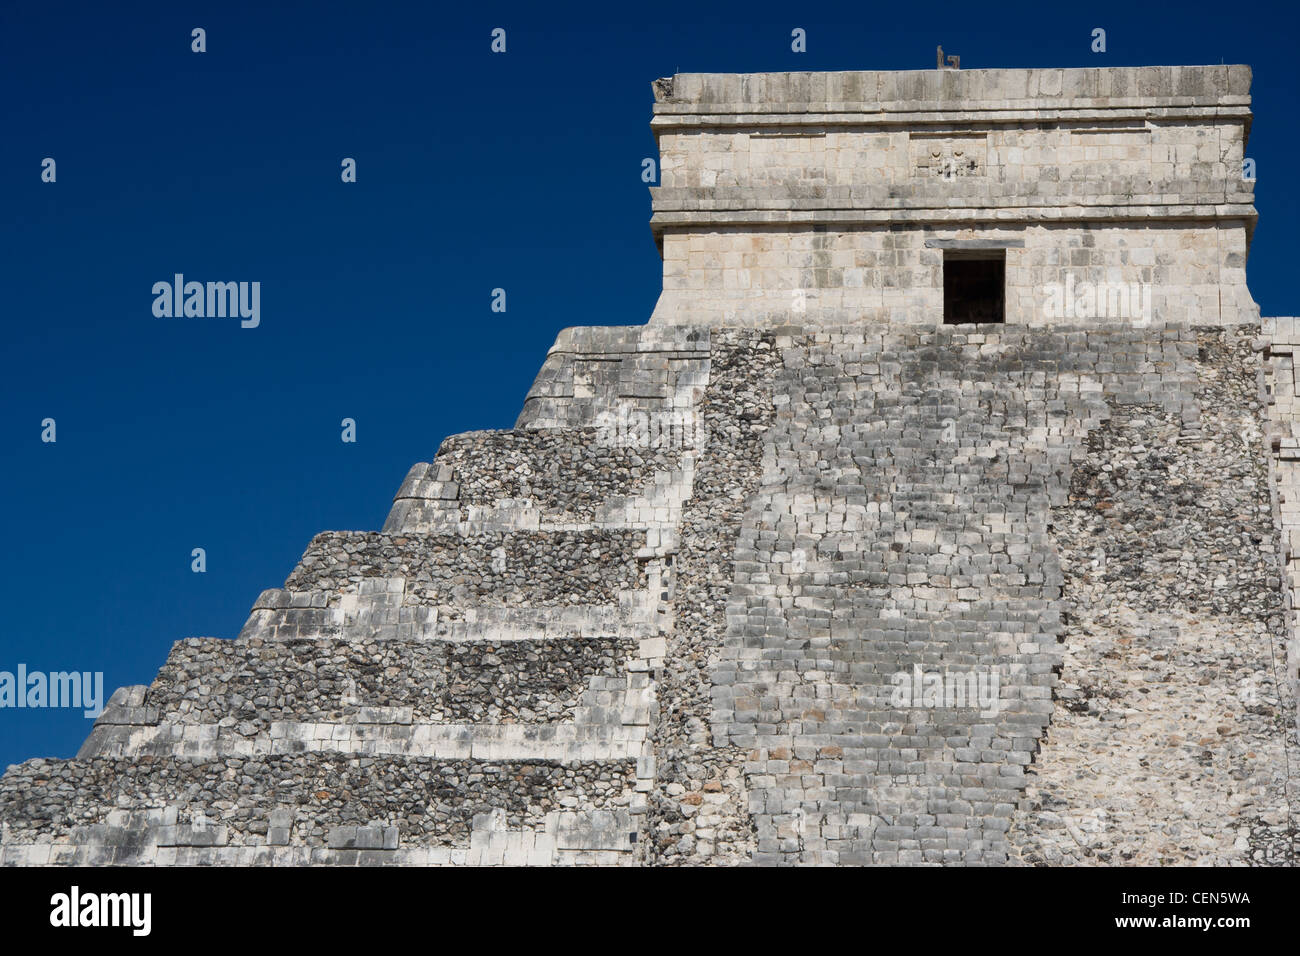 Close up of a section of El Castillo, Chichen Itza, Yucatán, Mexico. Stock Photo